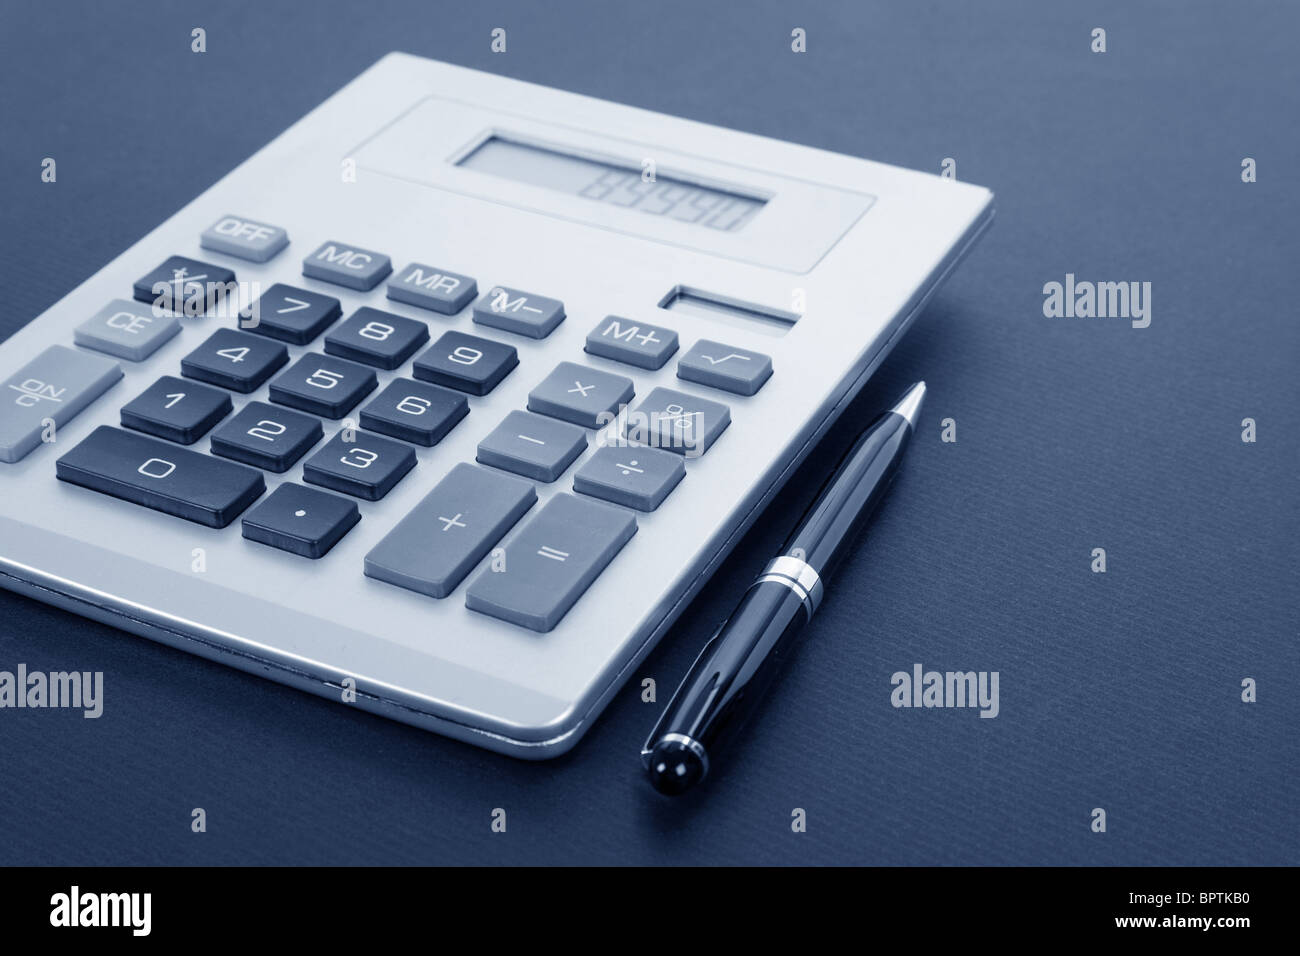 a calculator close up shot Stock Photo